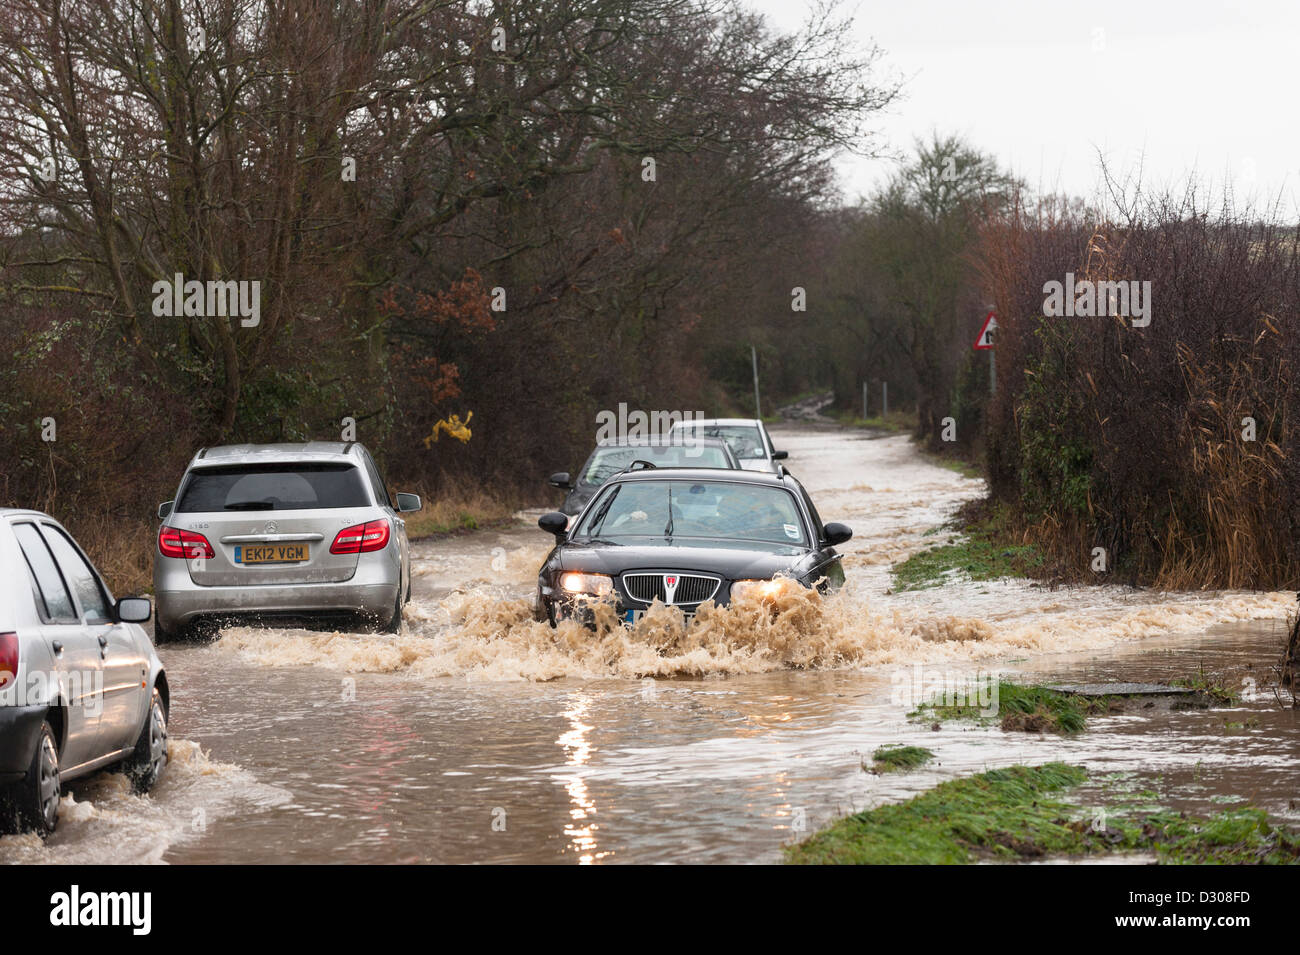 Flooding, UK - Cars struggle to drive along a flooded country road, England, UK Stock Photo